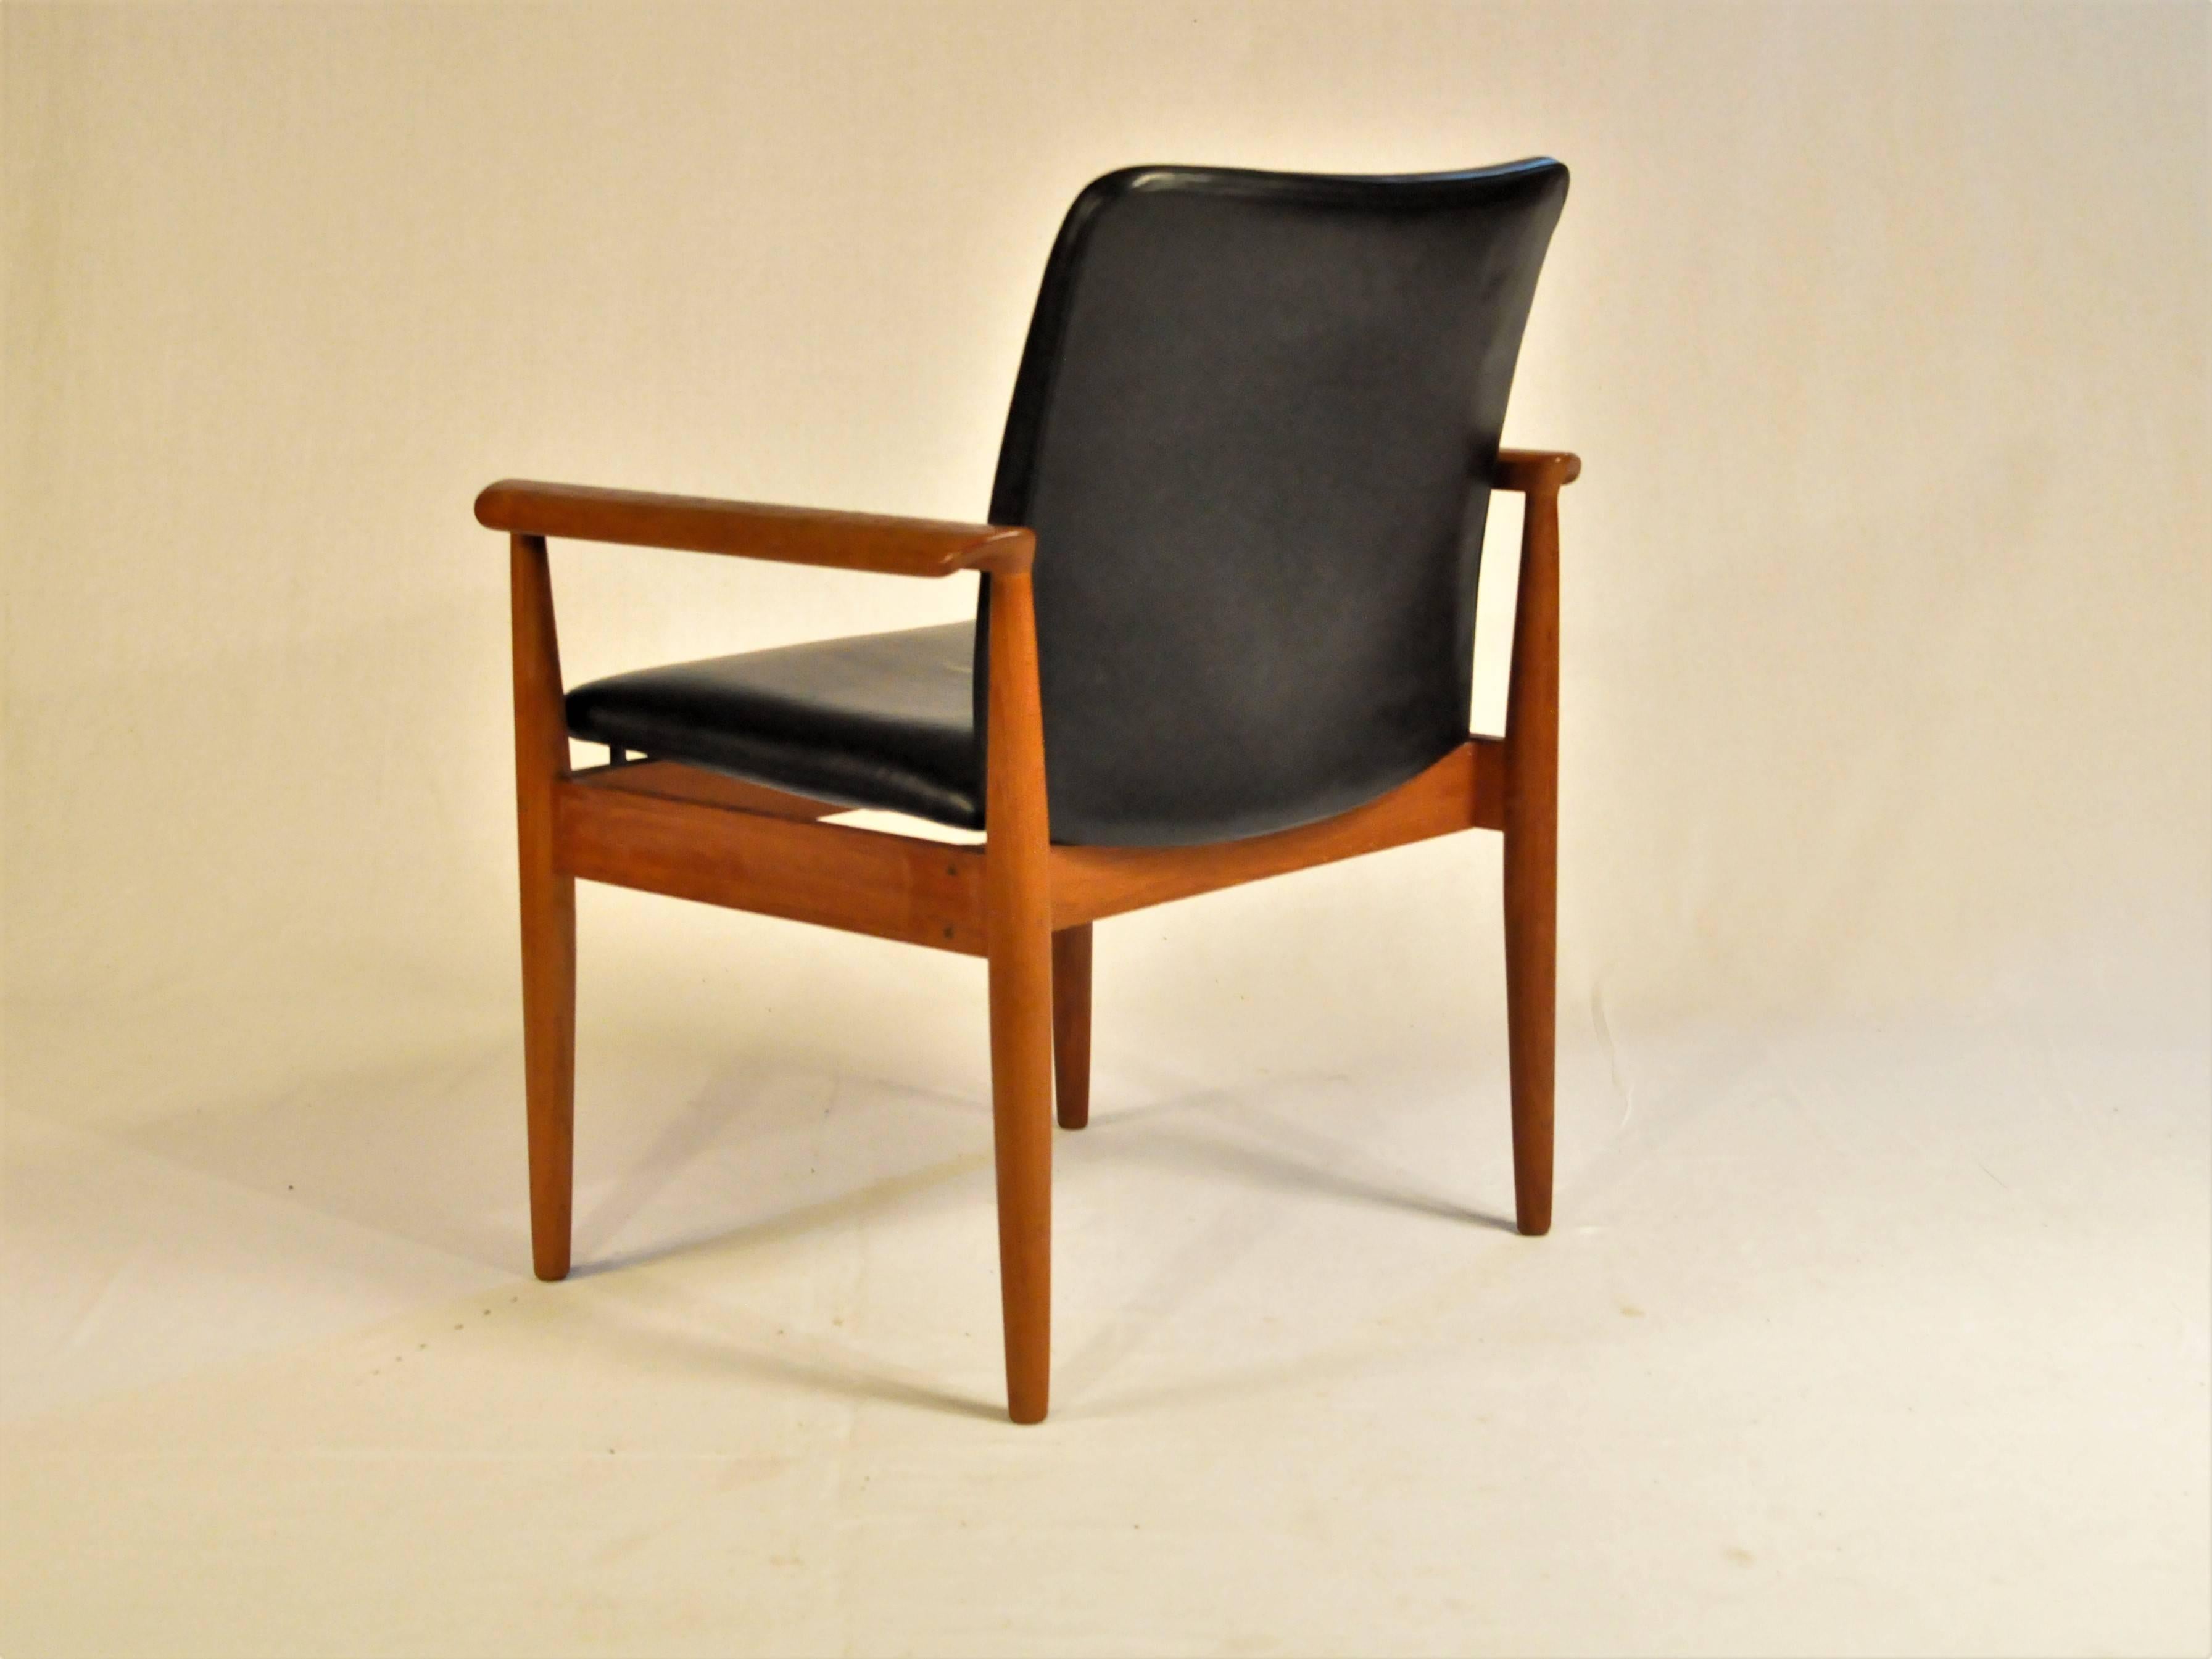 Woodwork 1960s Finn Juhl Model 209 Diplomat Chair in Teak and Black Leather by Cado